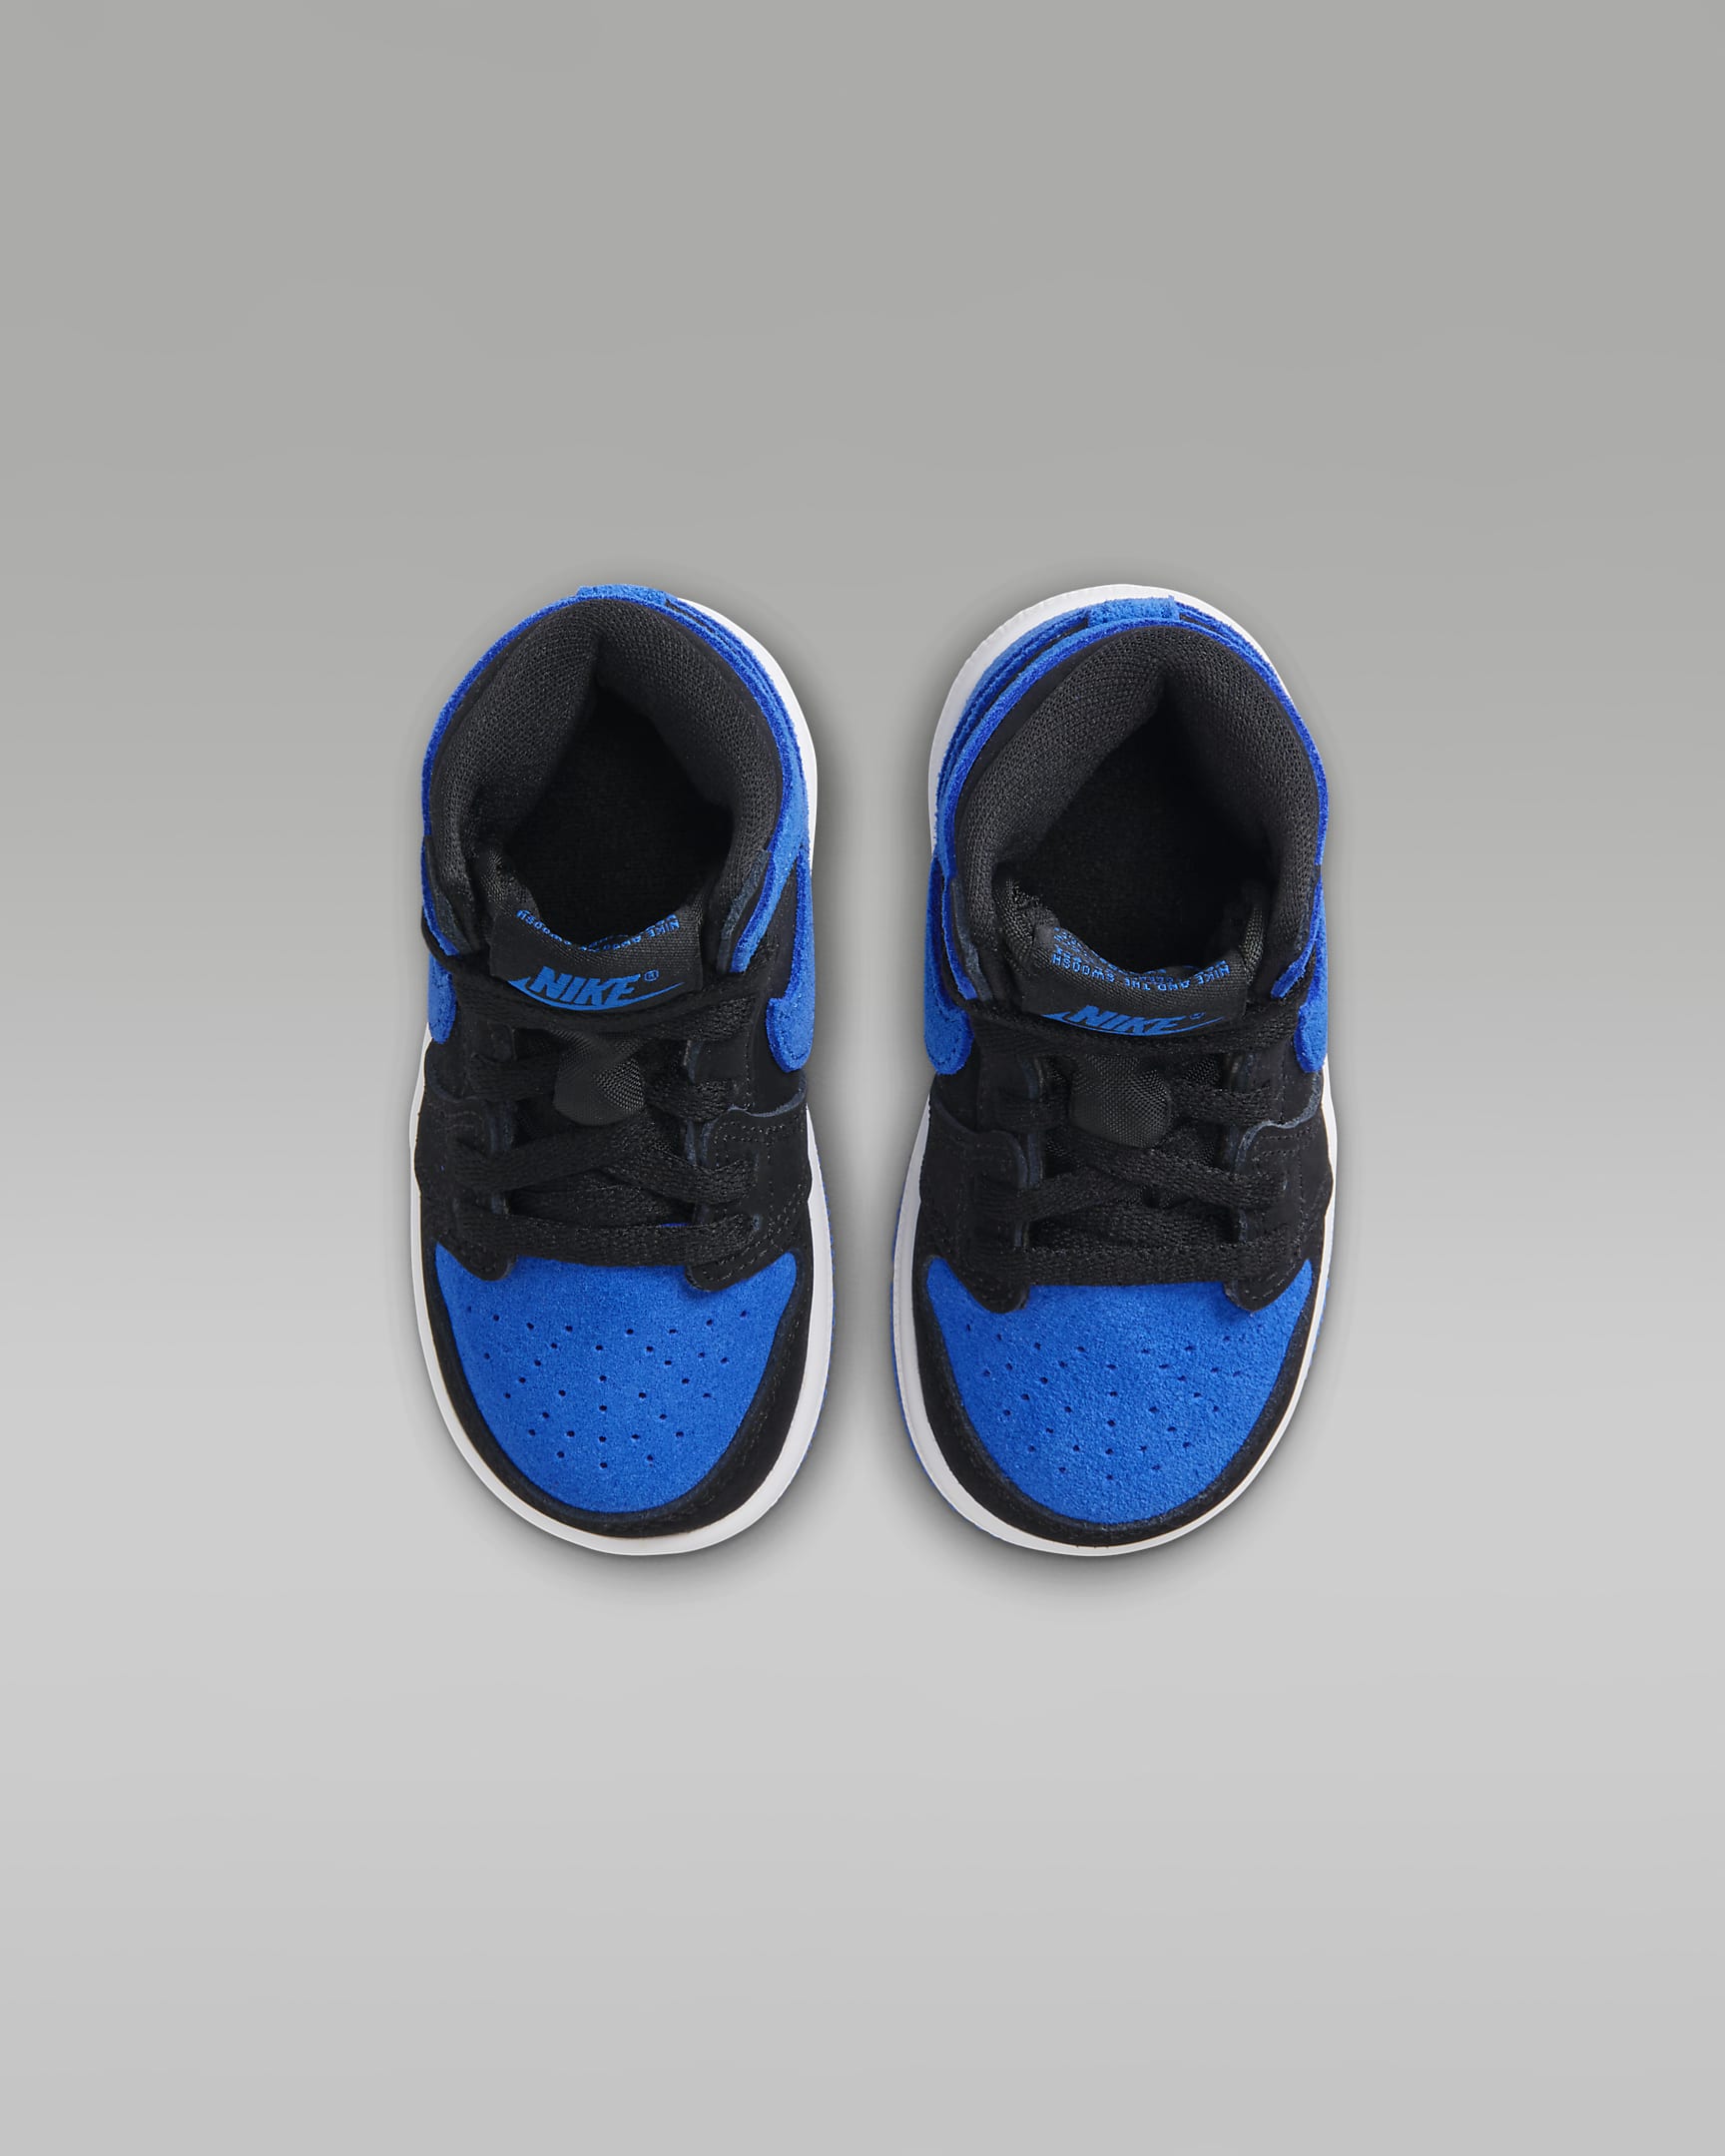 Jordan 1 Retro High OG Baby/Toddler Shoes - Black/White/Royal Blue/Royal Blue